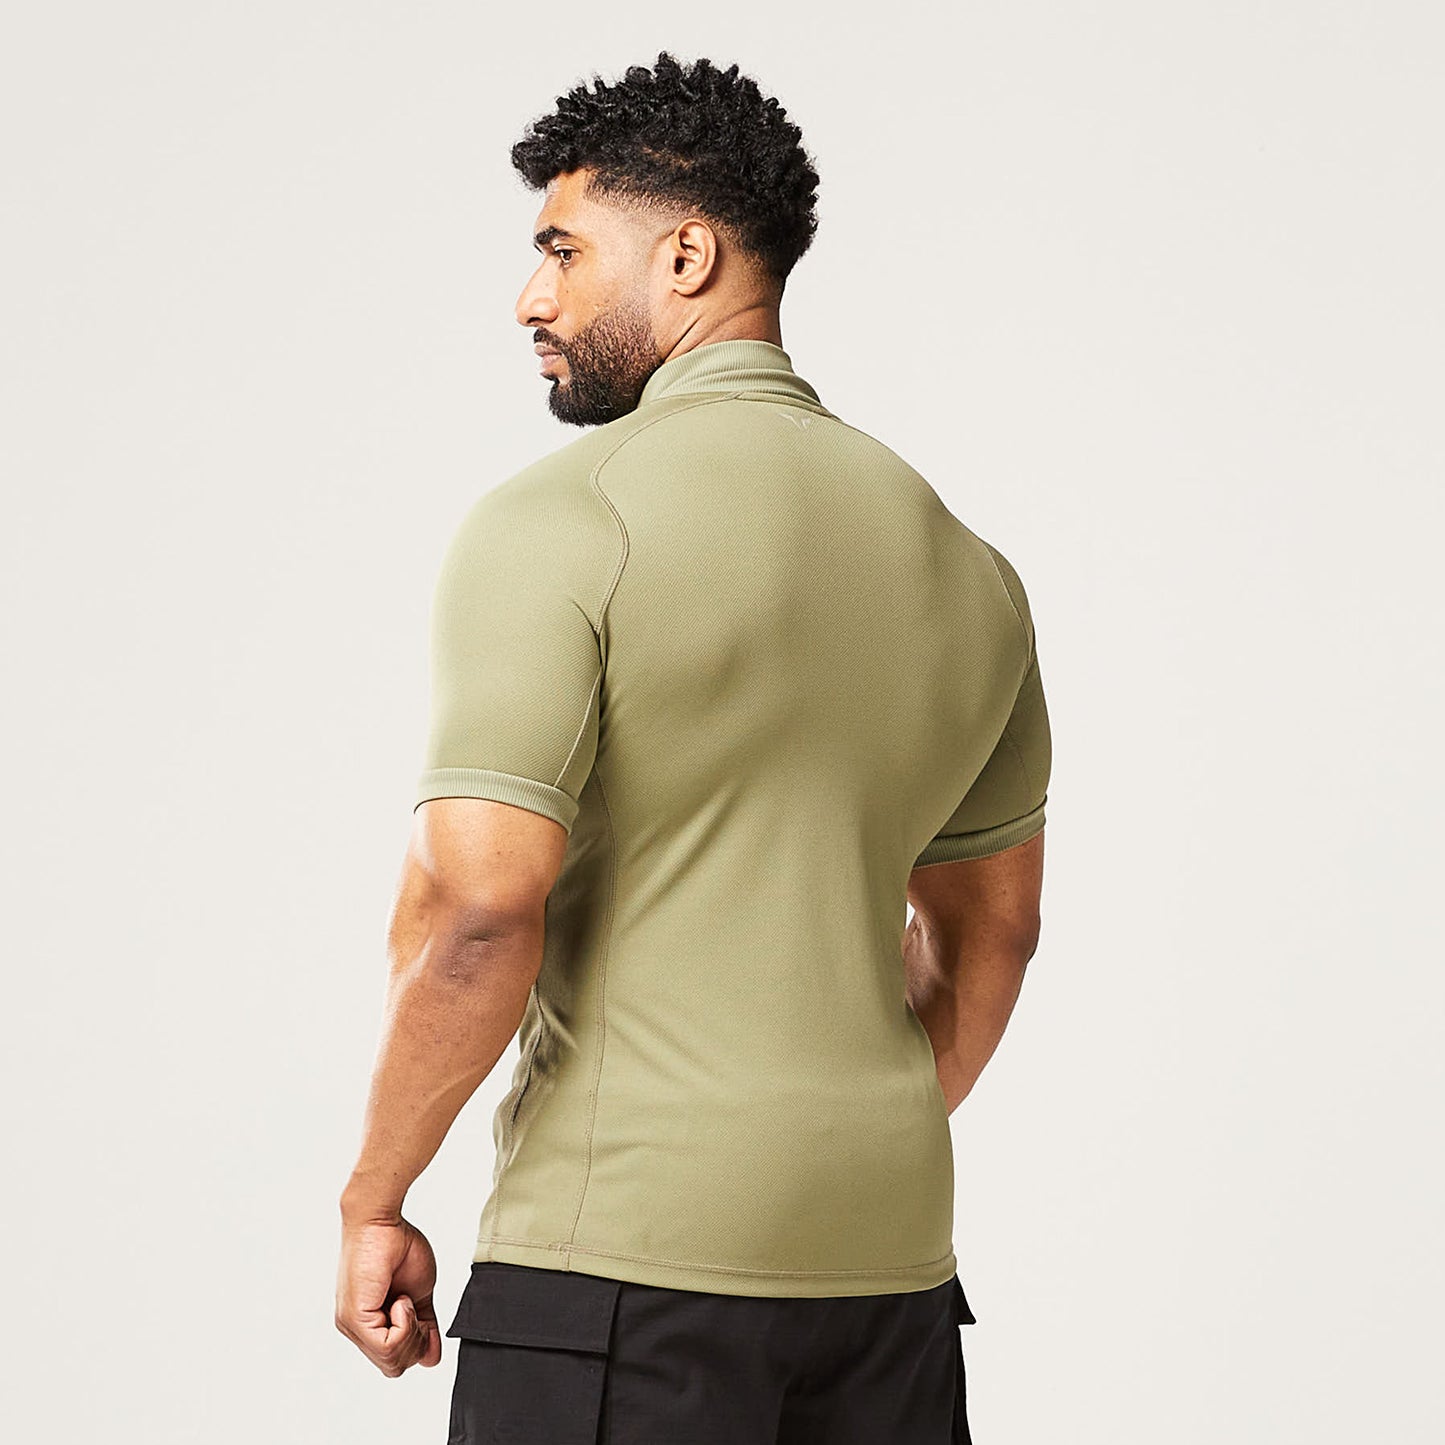 squatwolf-gym-wear-code-zip-up-tee-green-workout-shirts-for-men